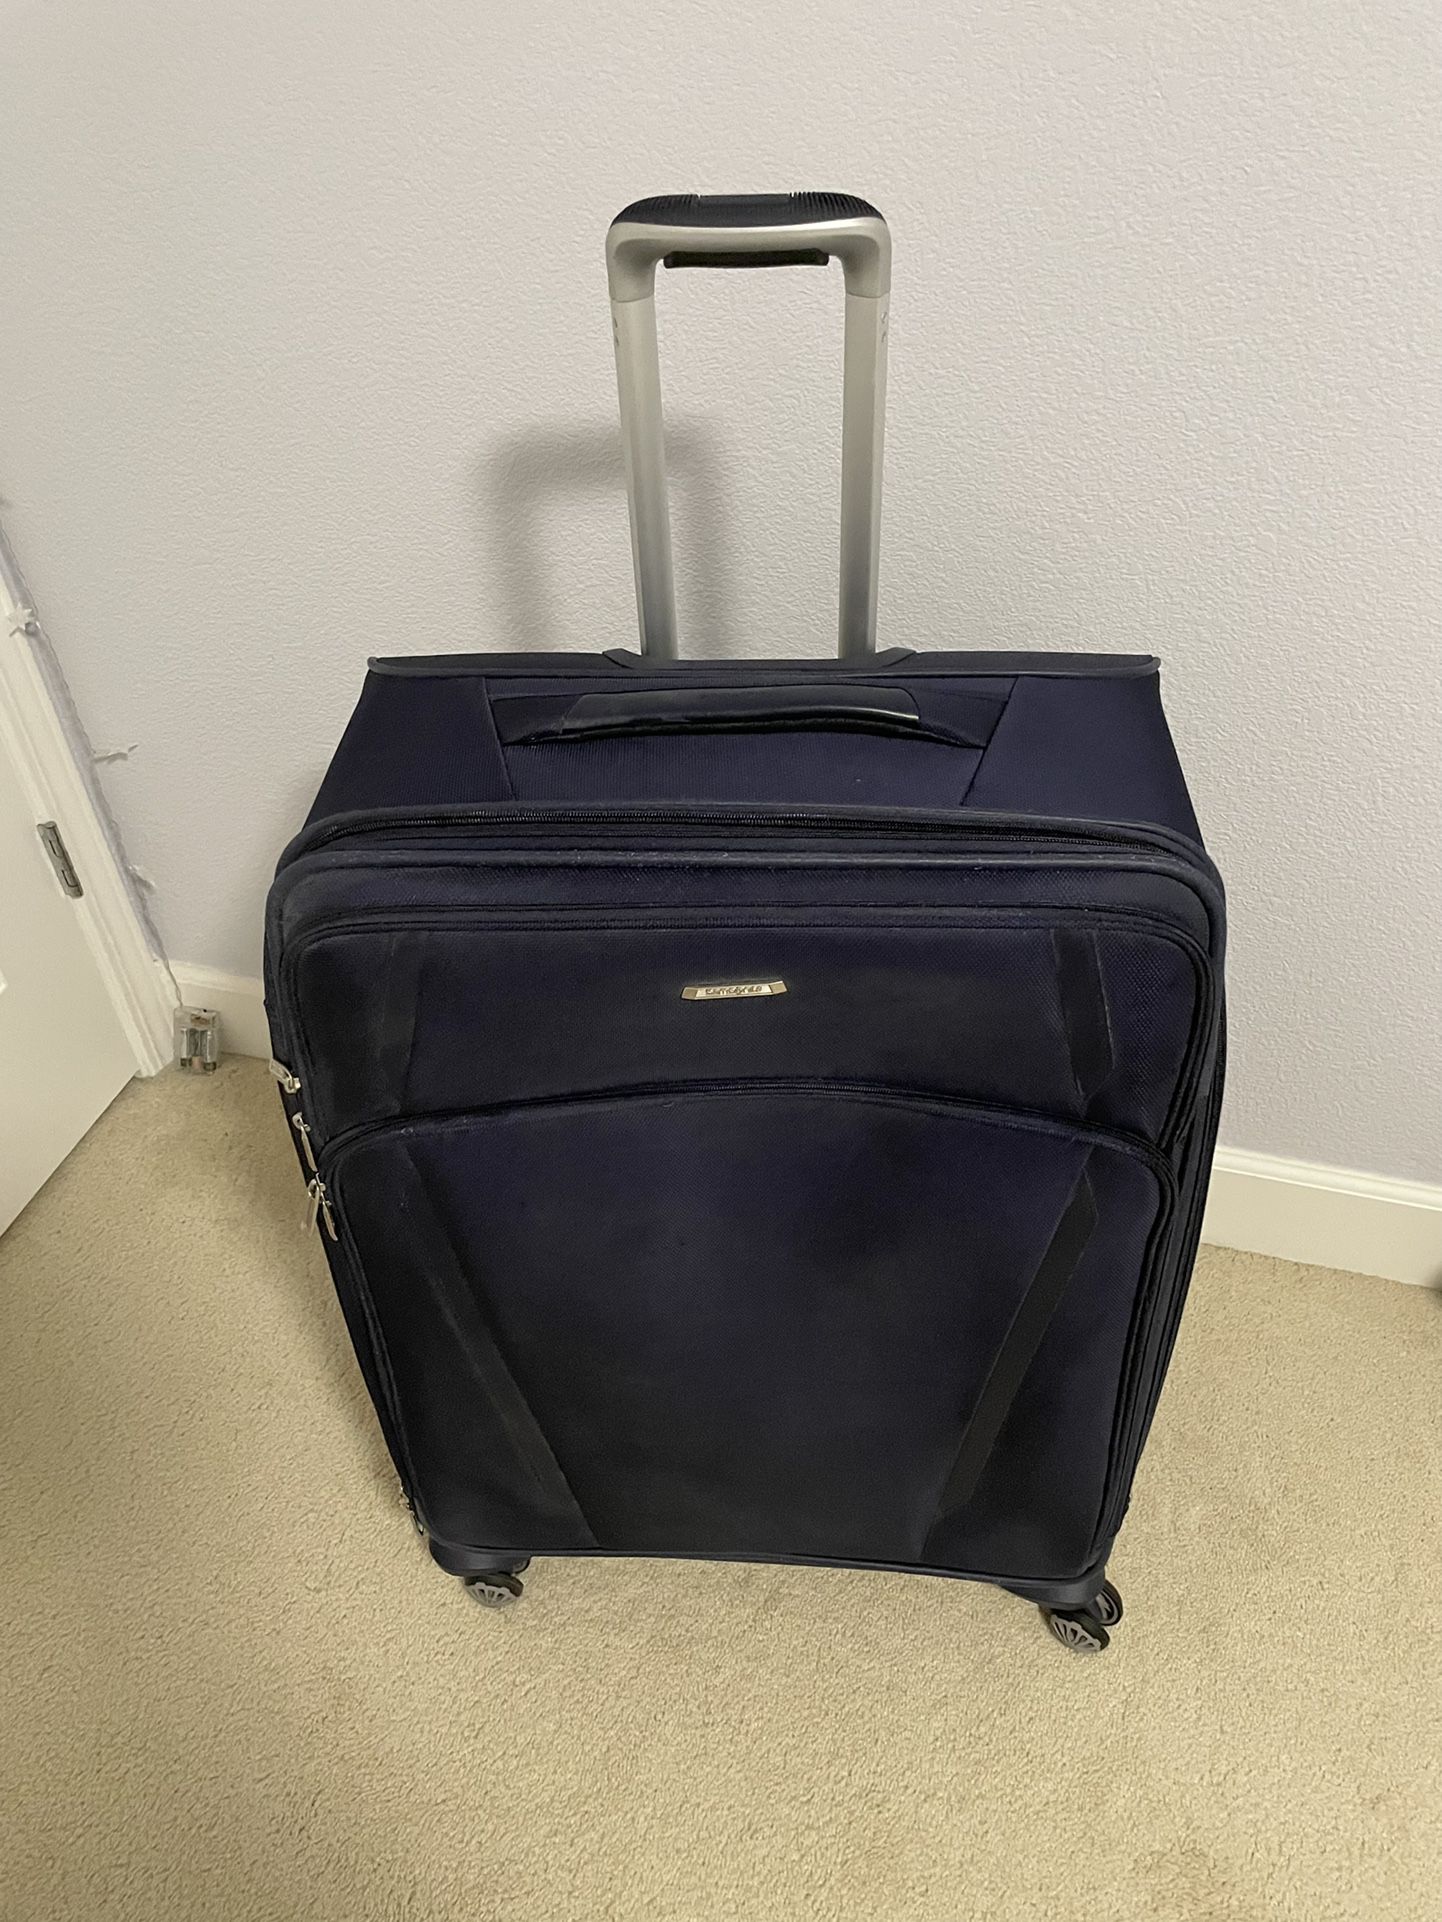 New Samsonite Spinner Luggage Retail: $299